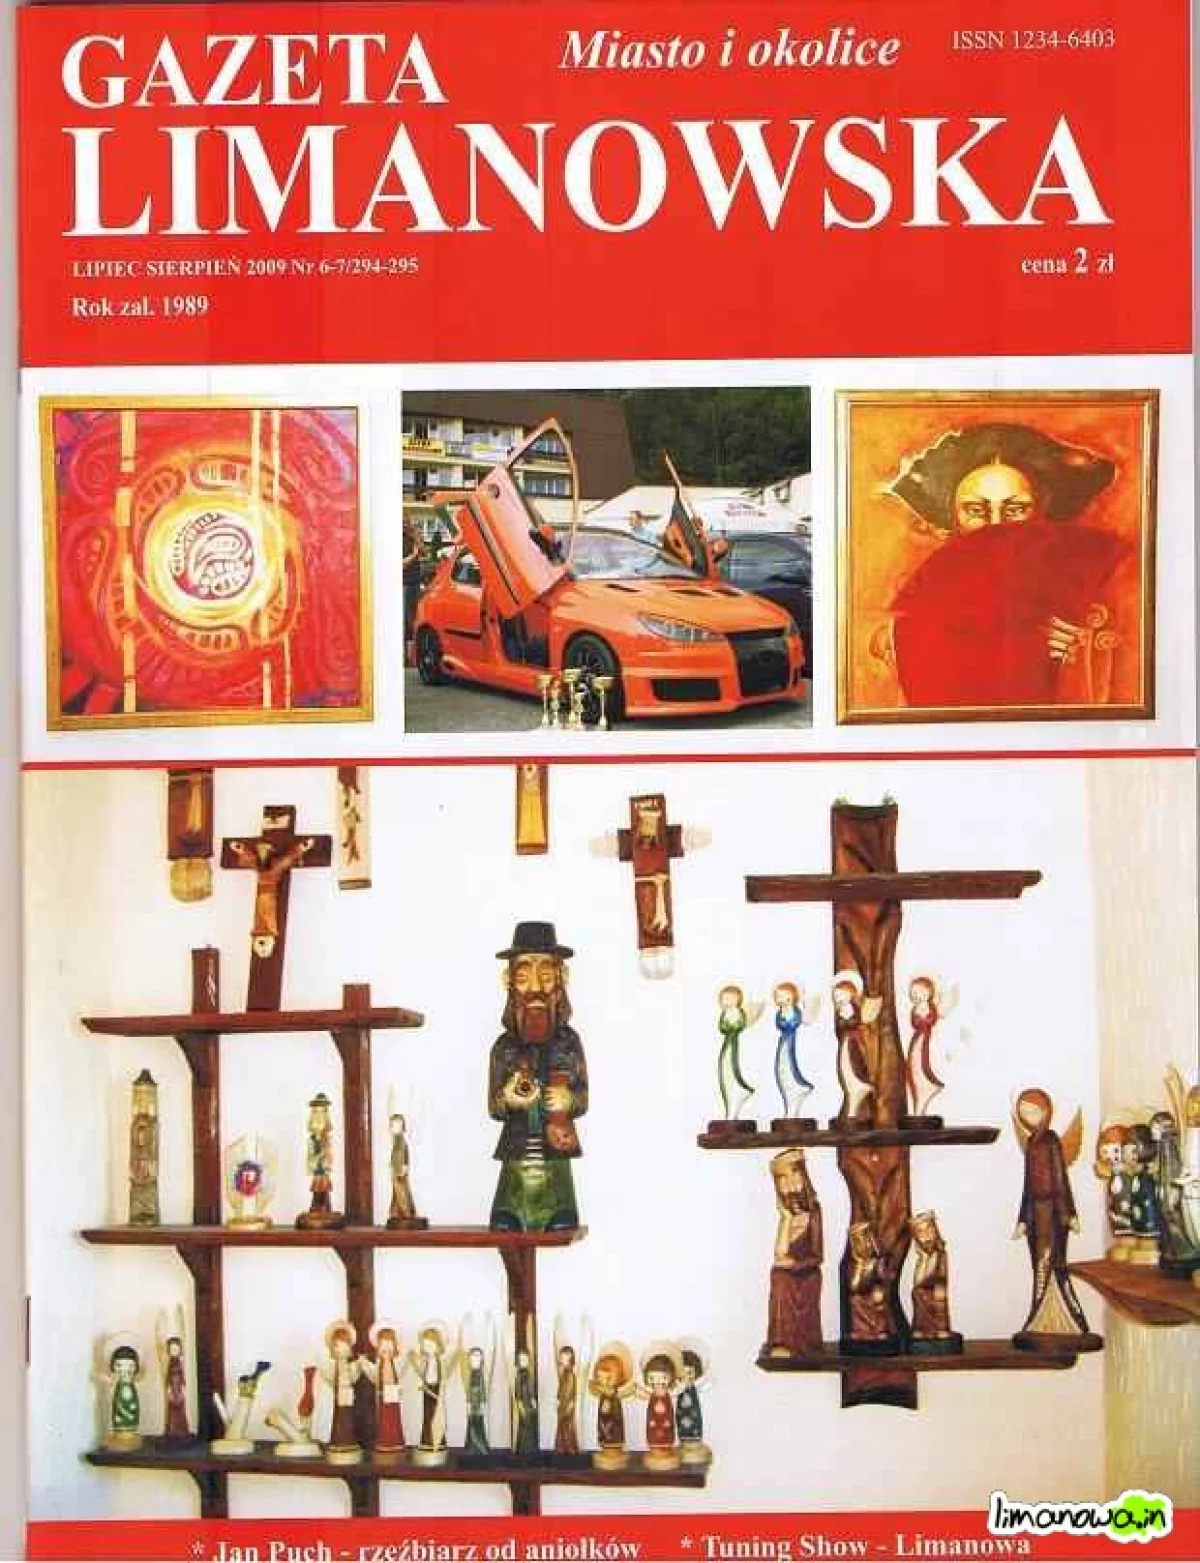 Gazeta Limanowska ma już 20 lat!